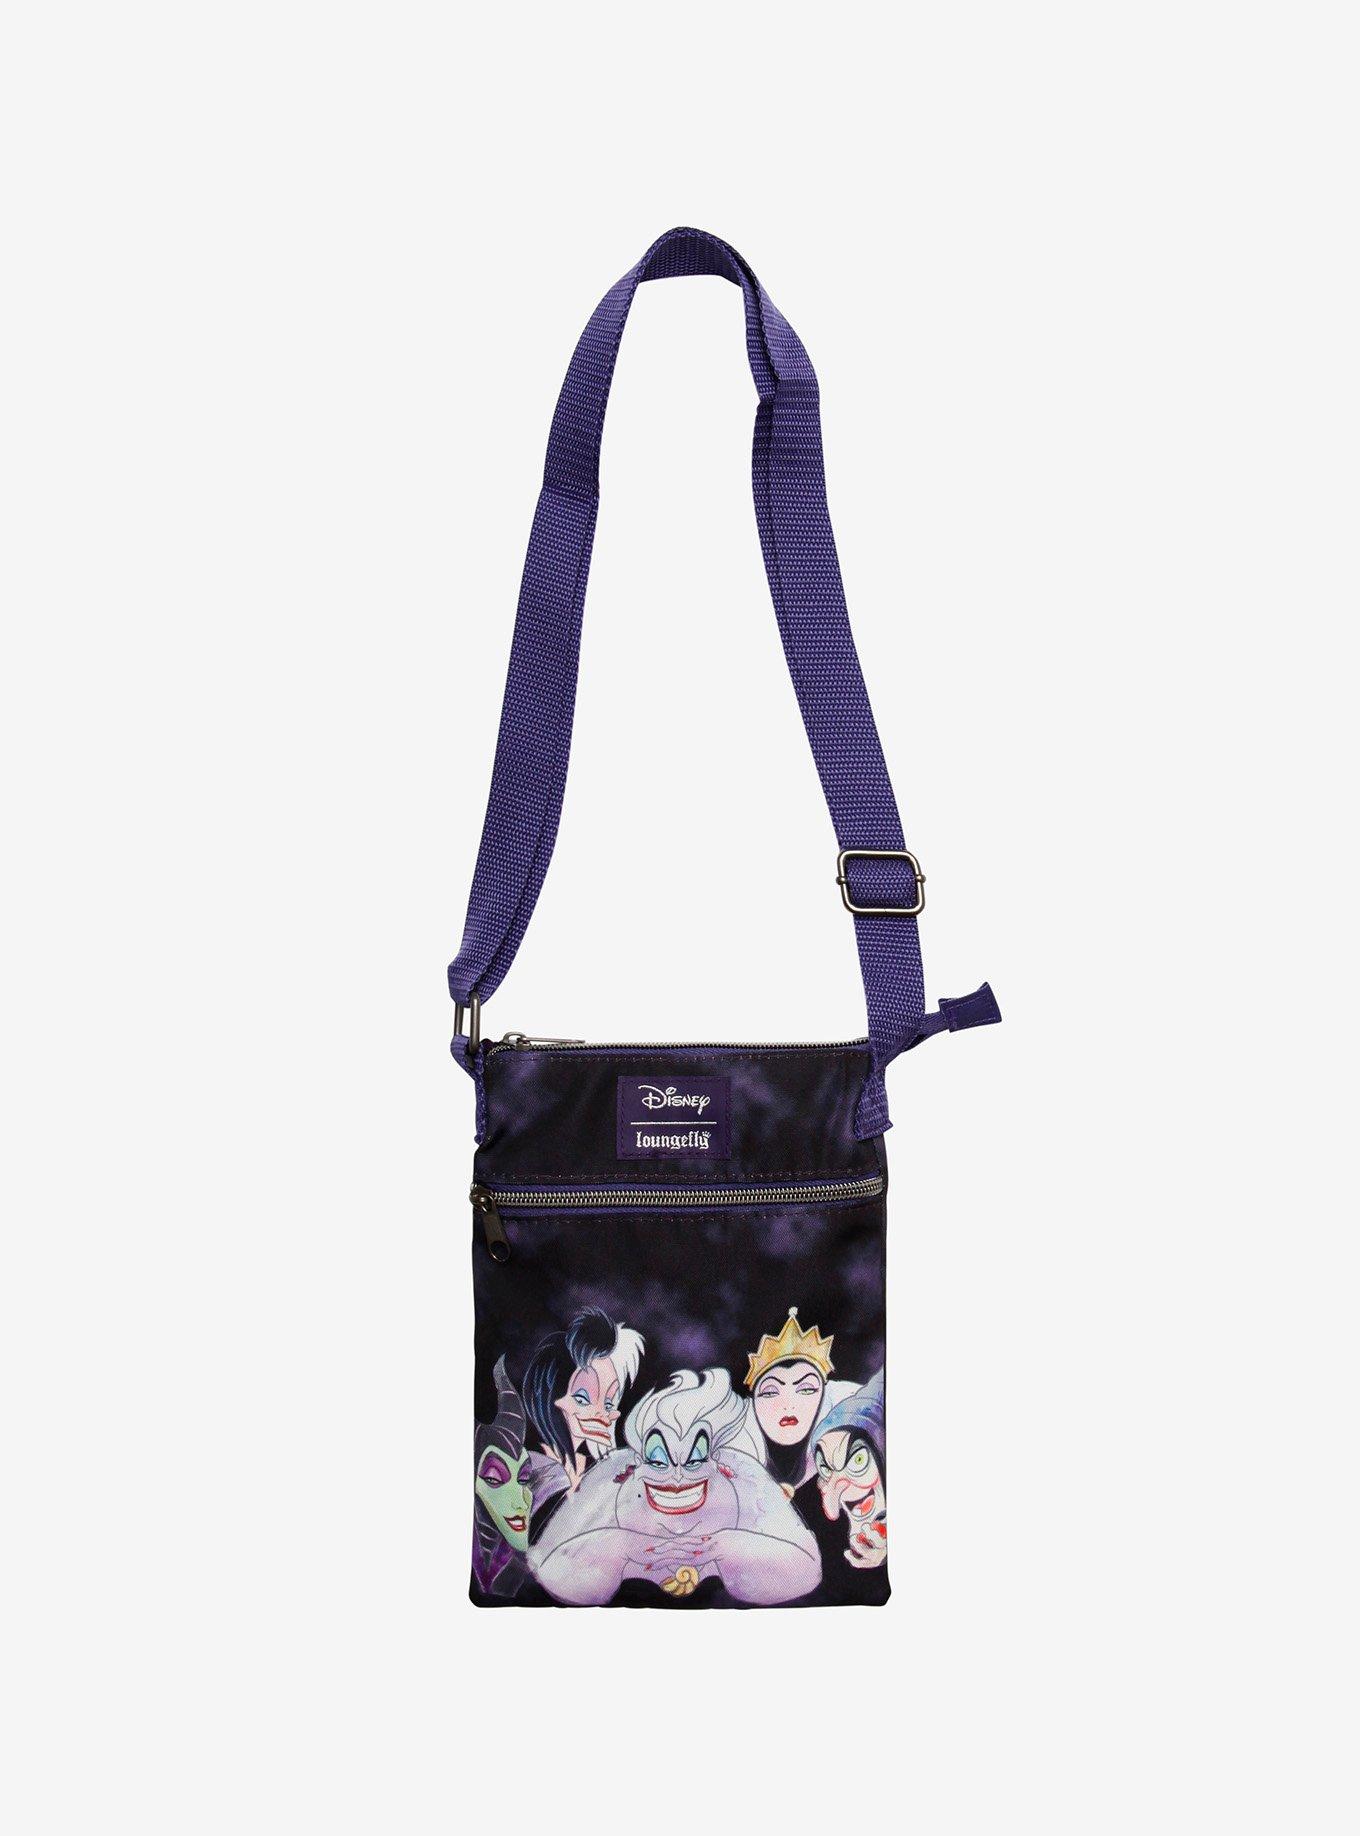 Buy Your Disney Villains Loungefly Crossbody Bag (Free Shipping) - Merchoid